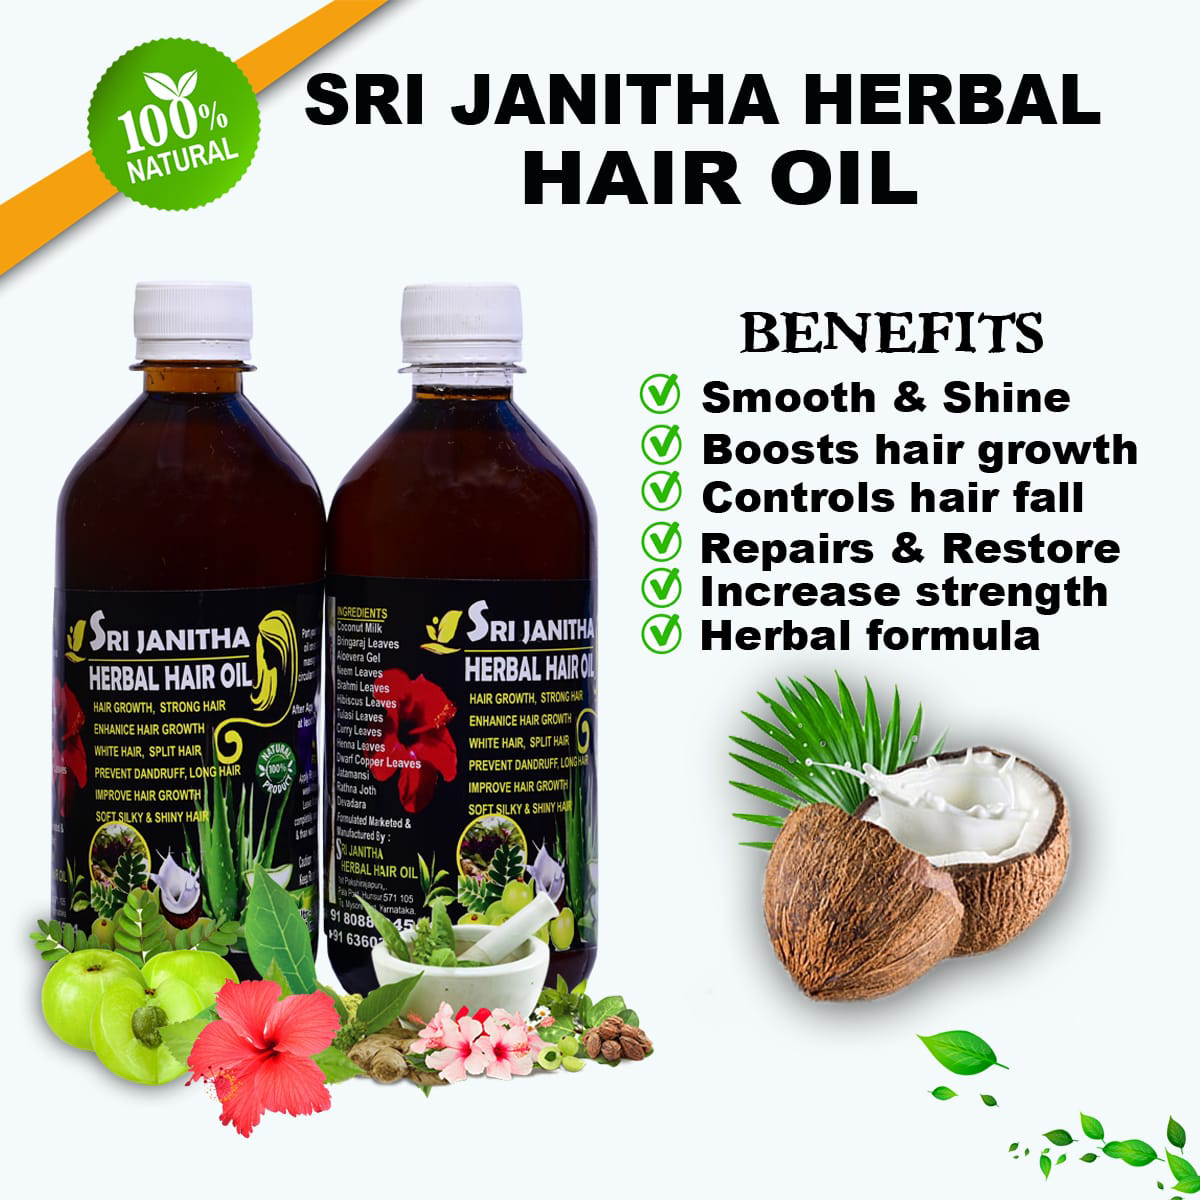 Sri Janitha Herbal Products